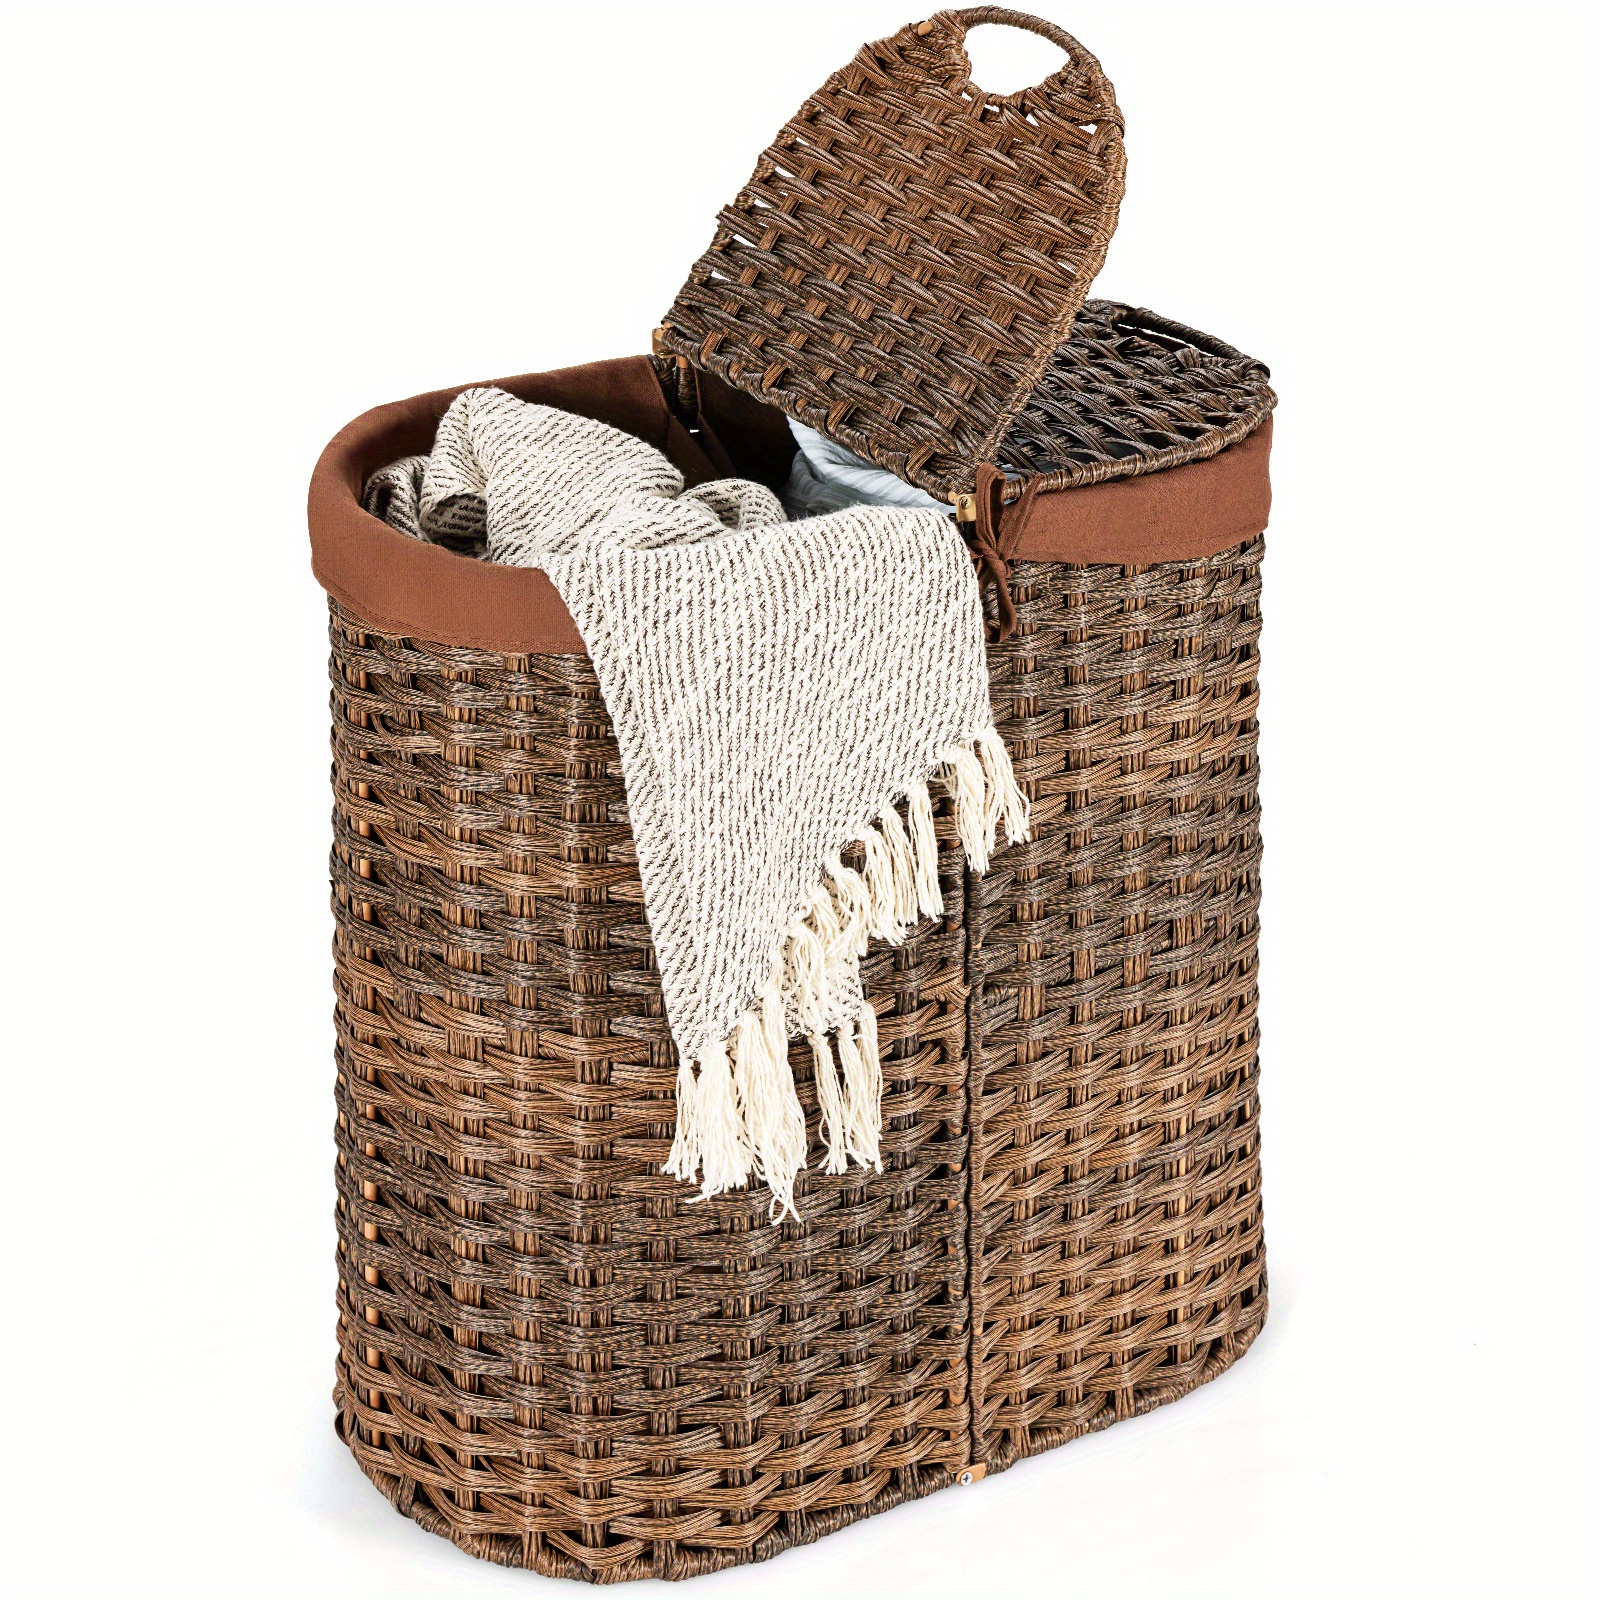 

Safstar Handwoven Laundry Hamper Laundry Basket W/2 Removable Liner Bags Brown